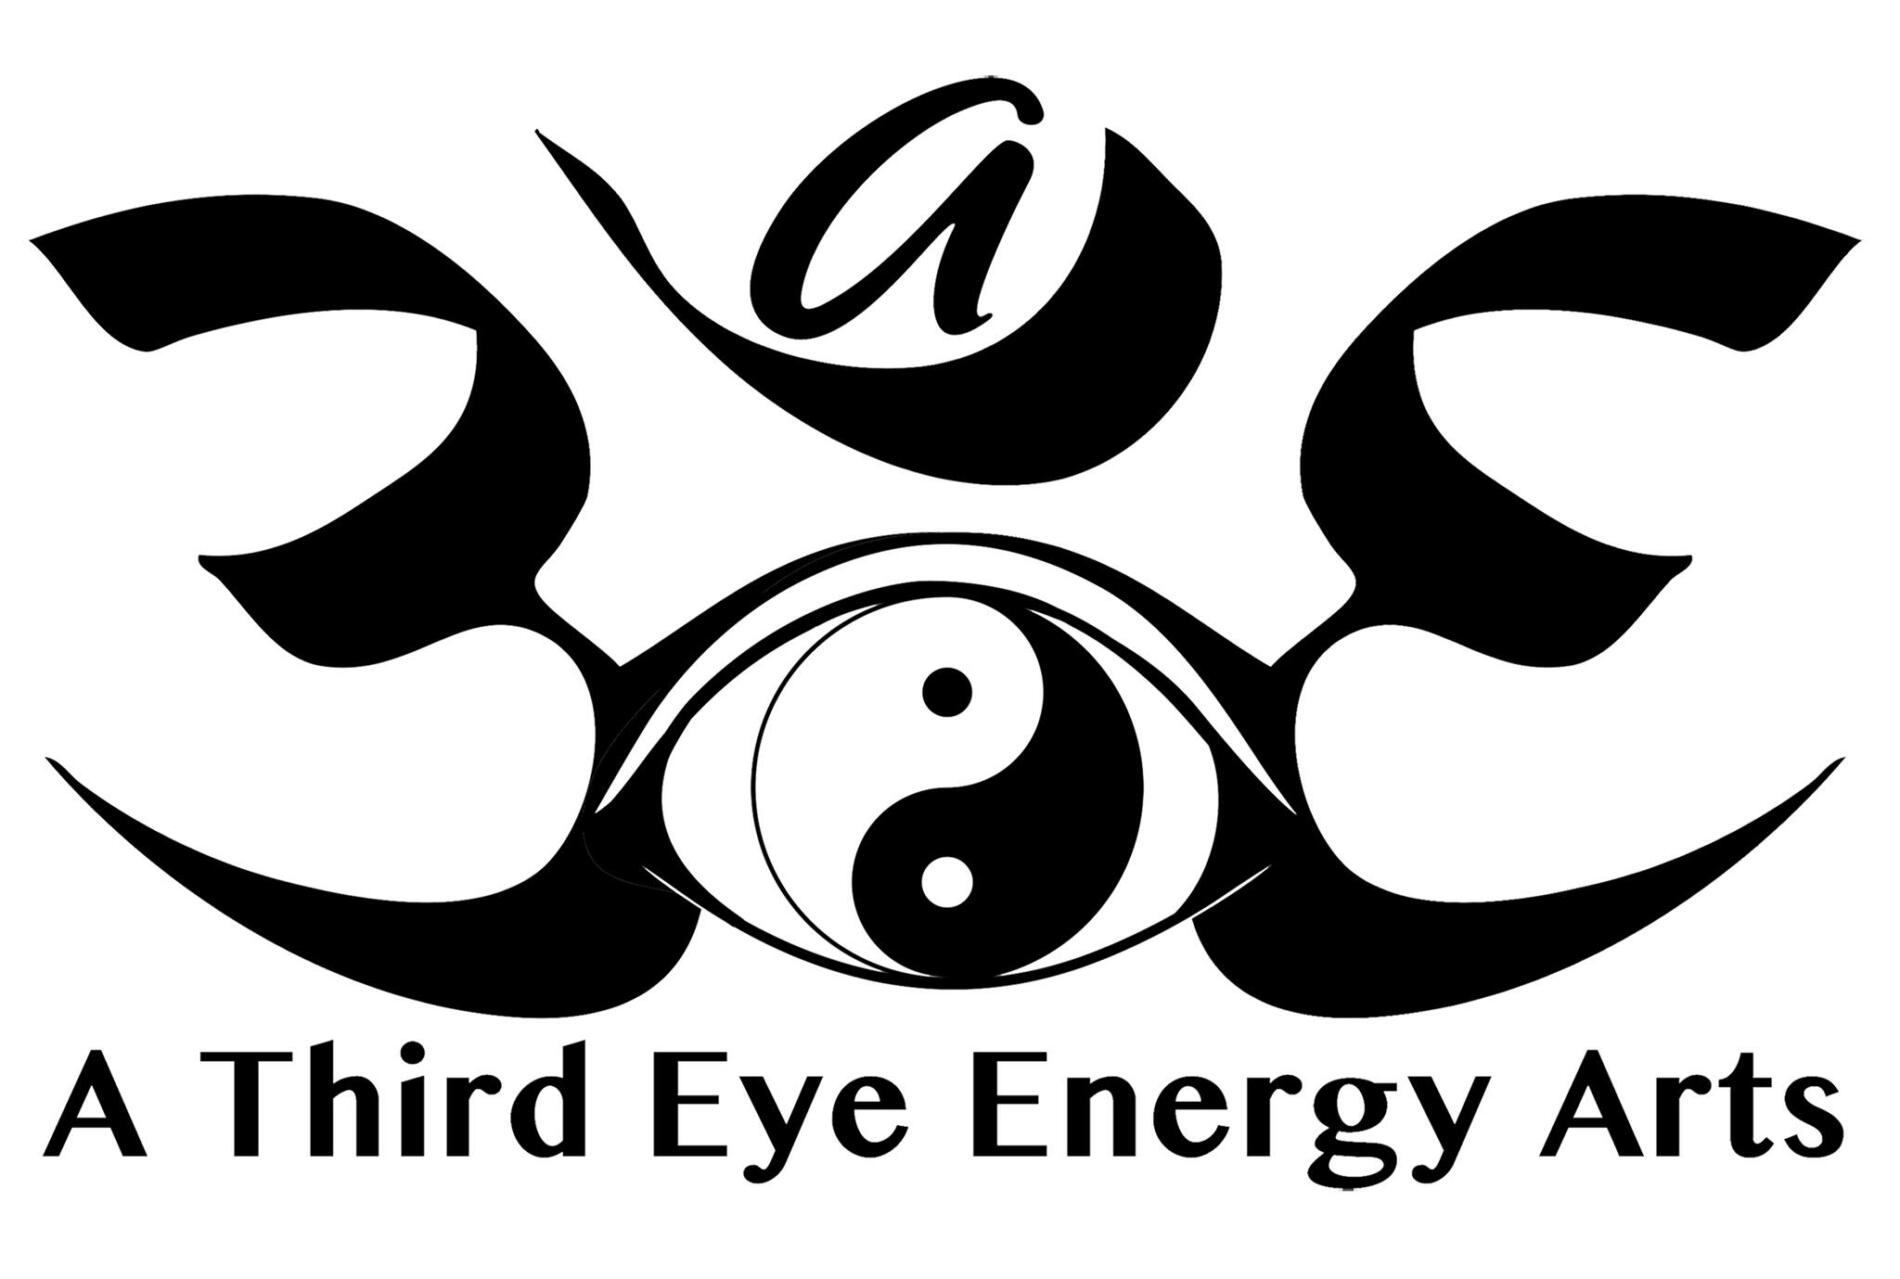 A Third Eye Energy Arts